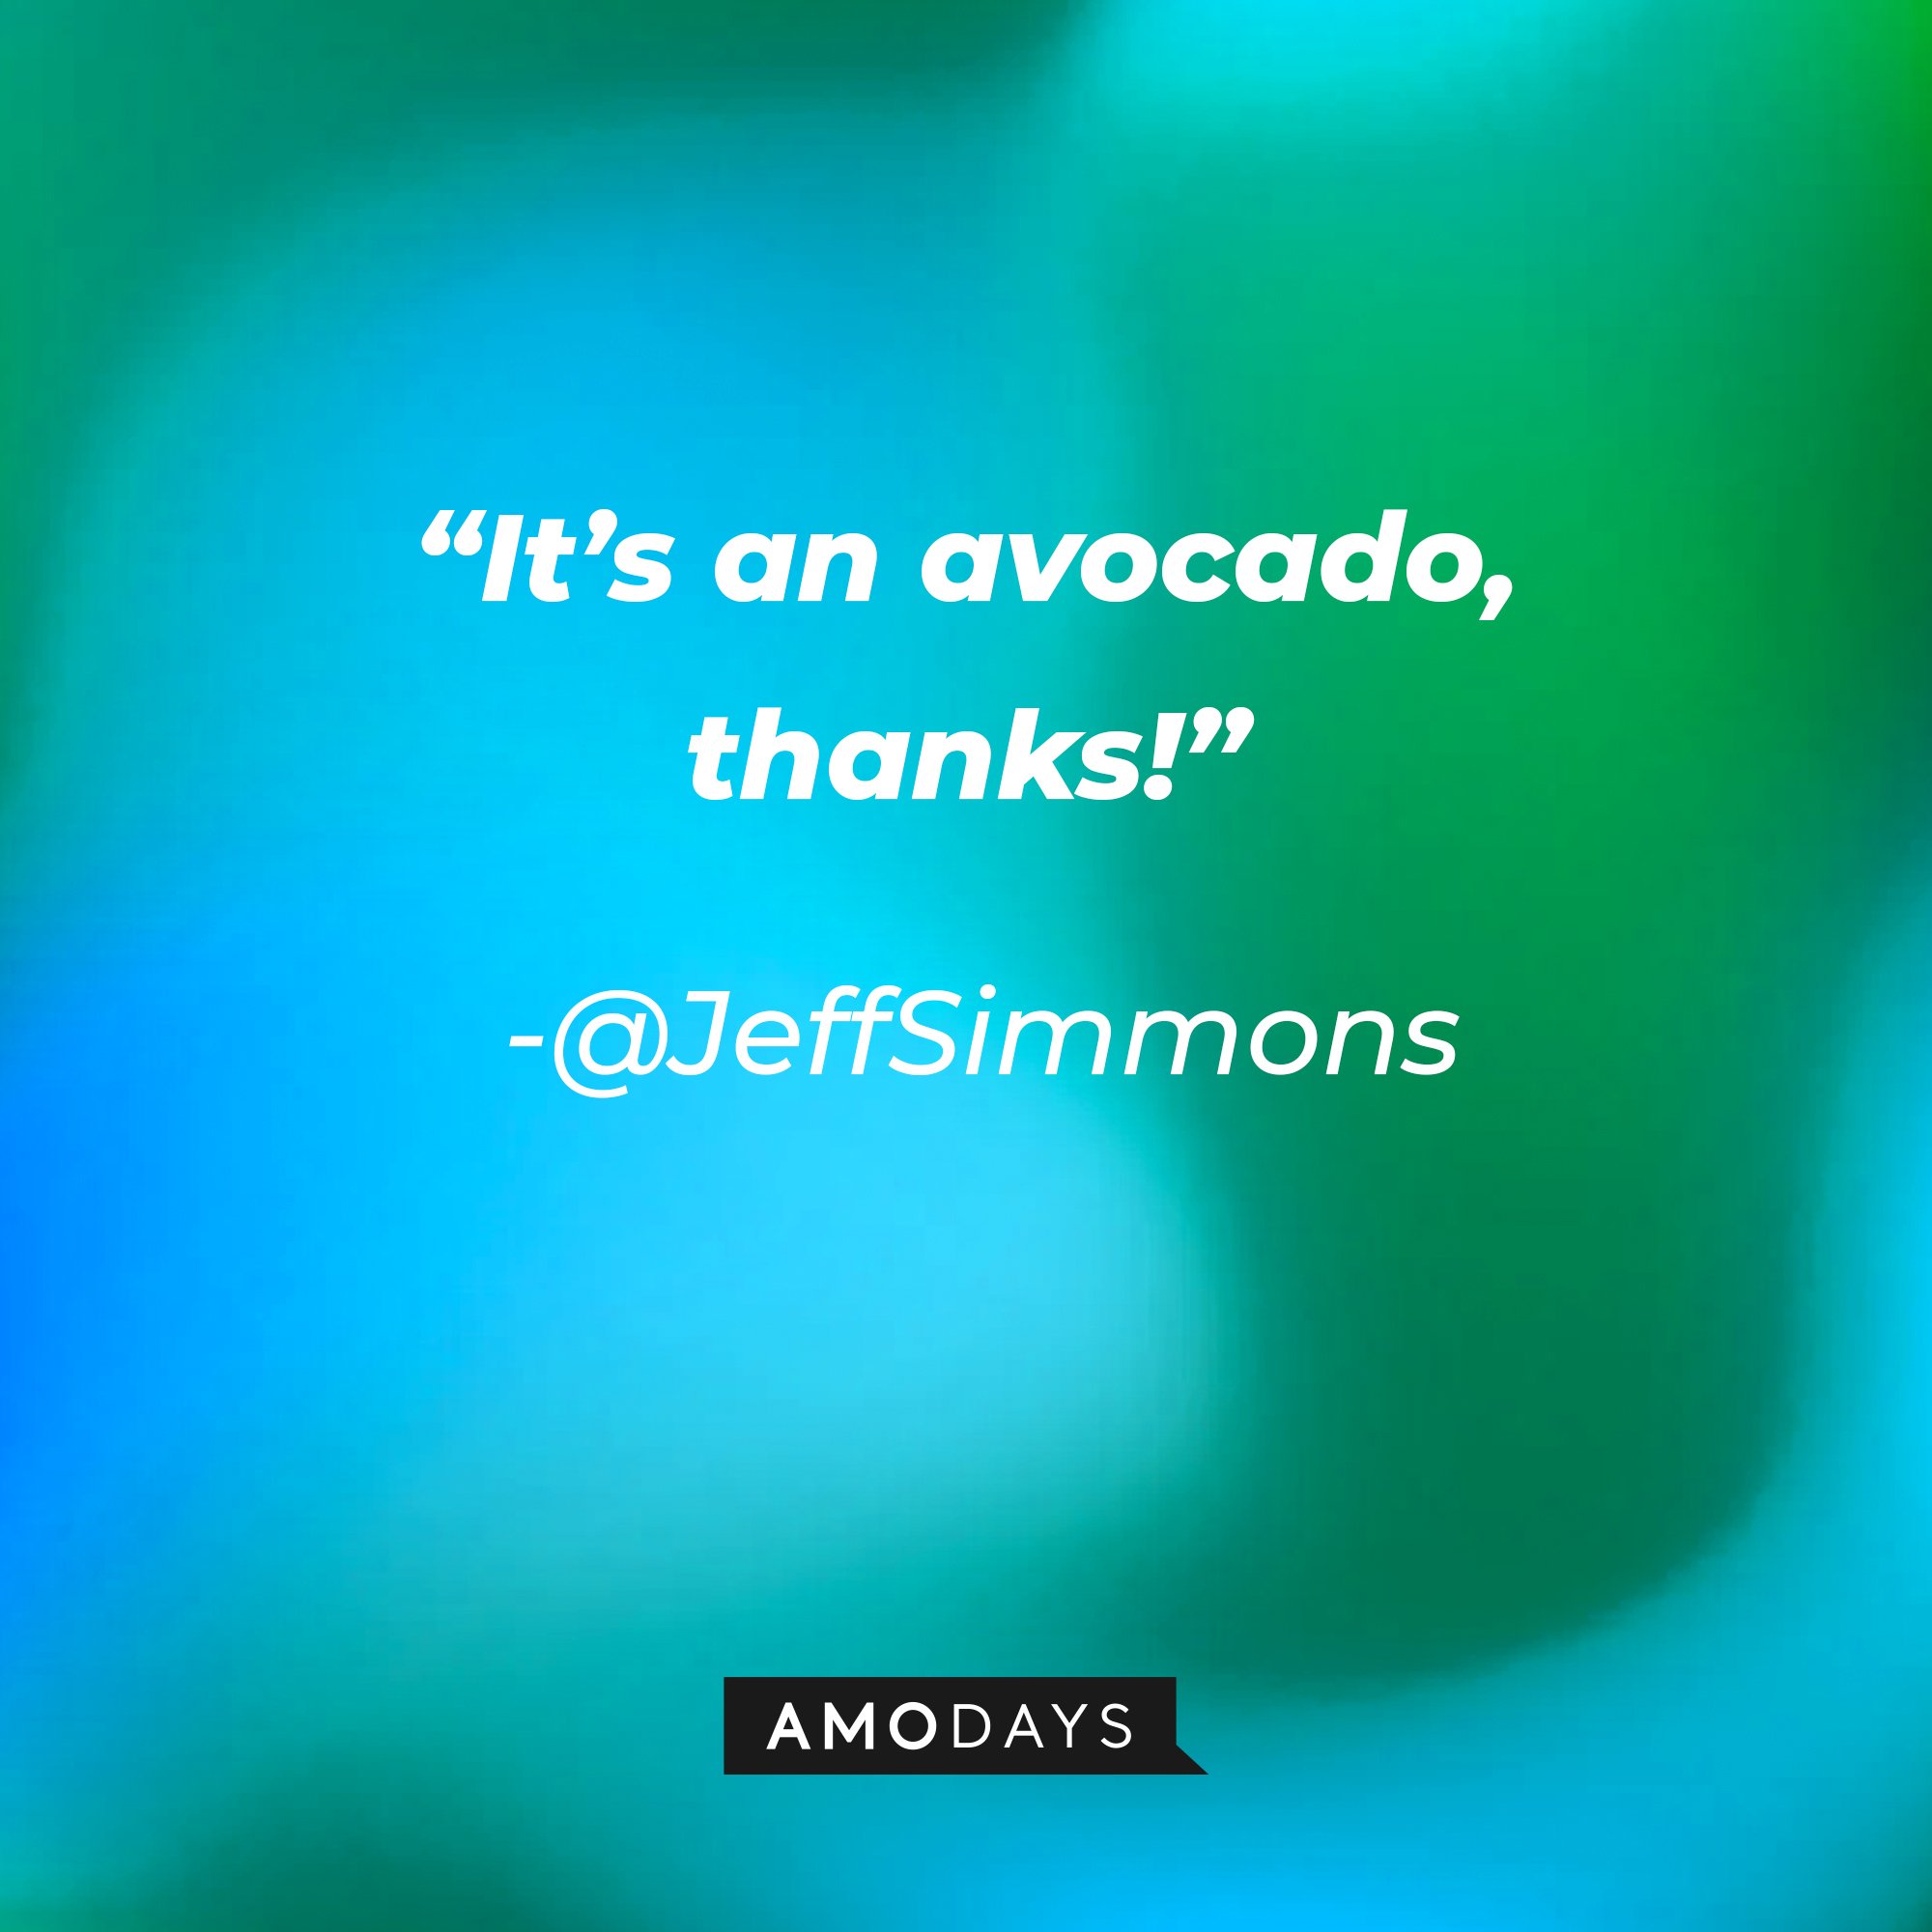 @JeffSimmons's quote: “It’s an avocado, thanks!” | Image: AmoDays